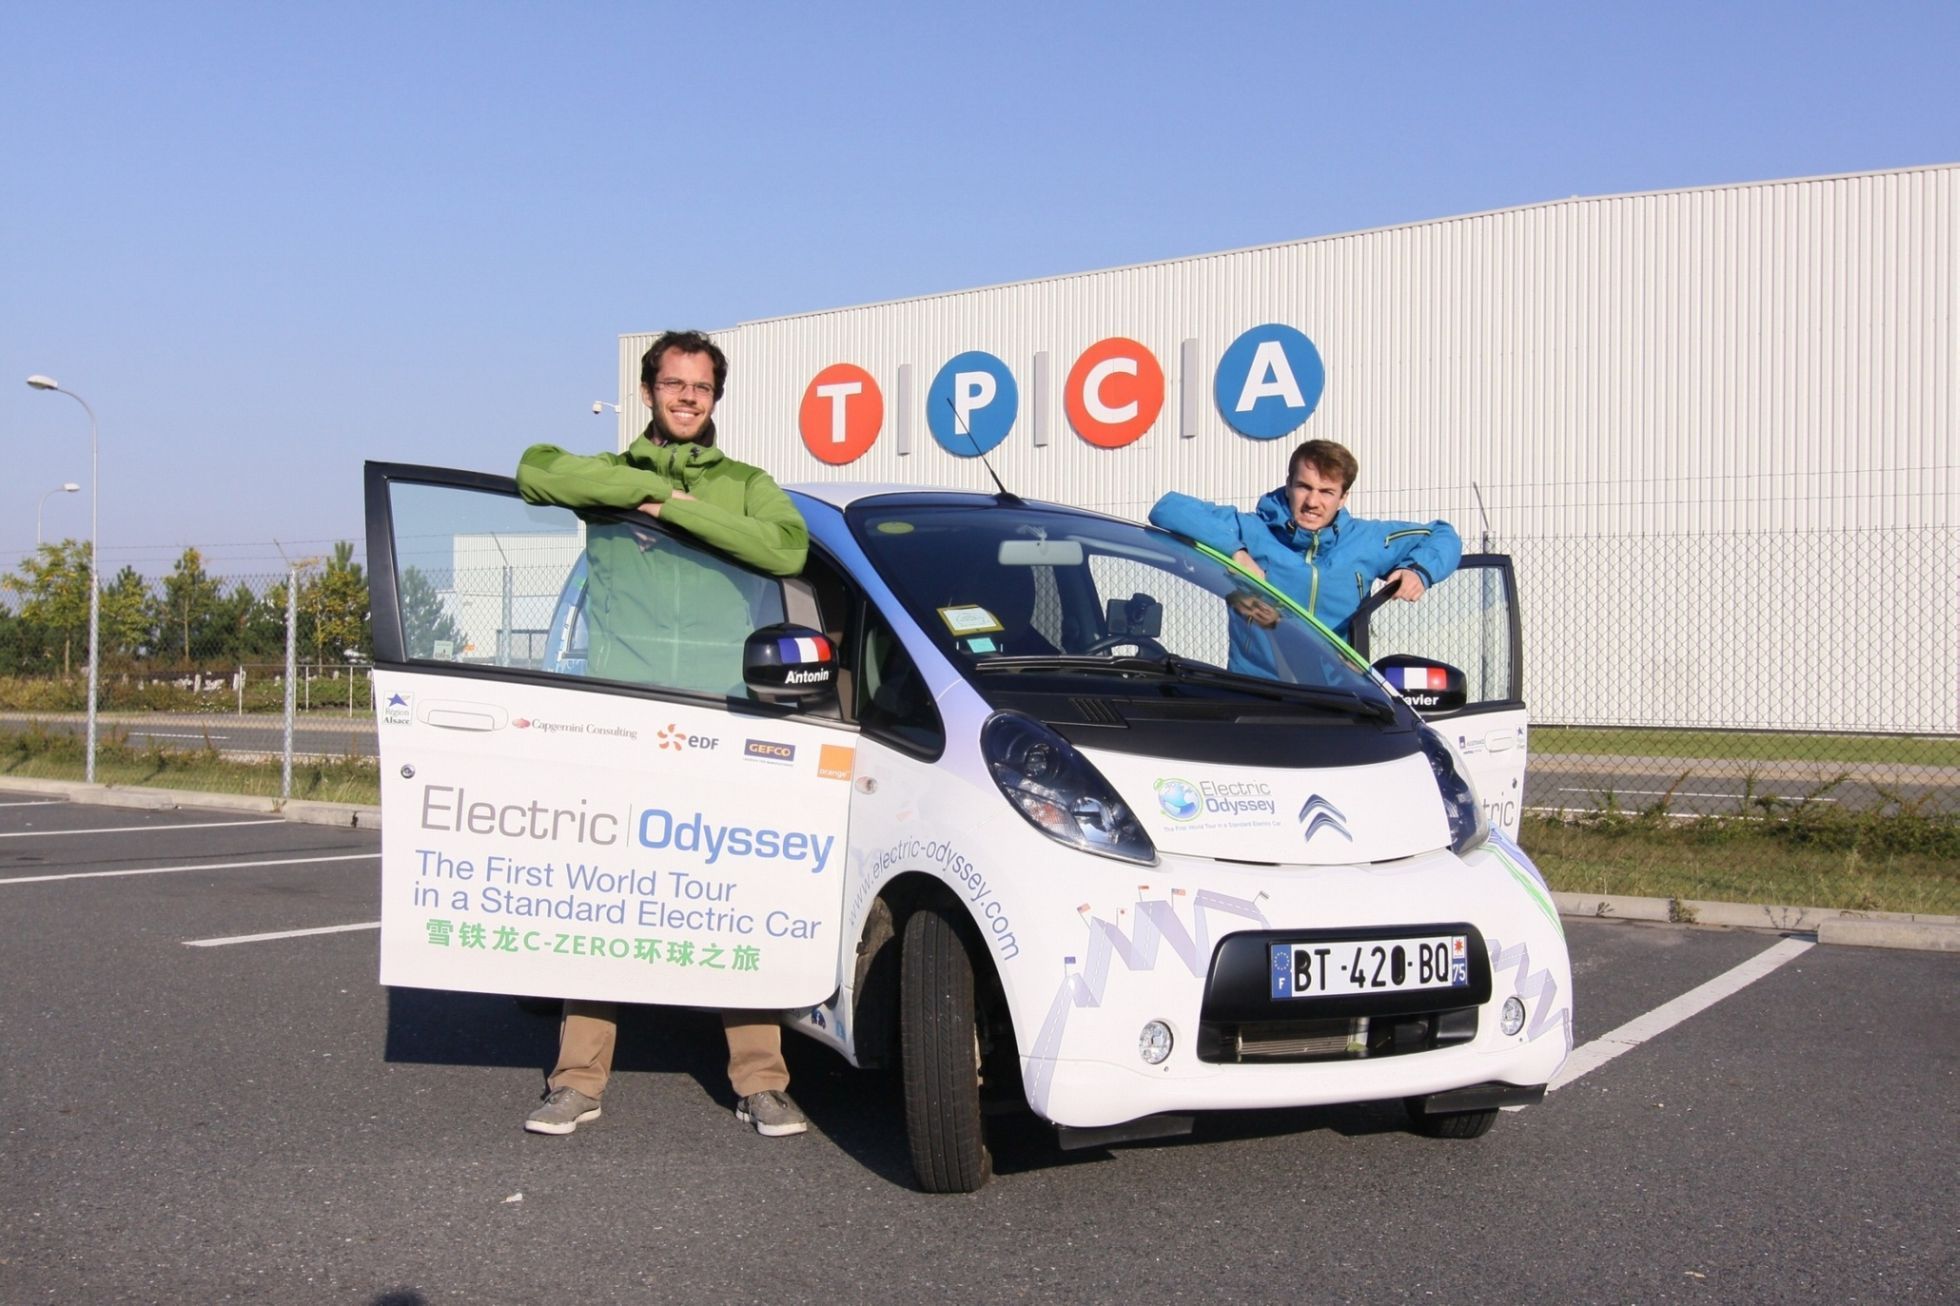 TPCA Electric Odyssey